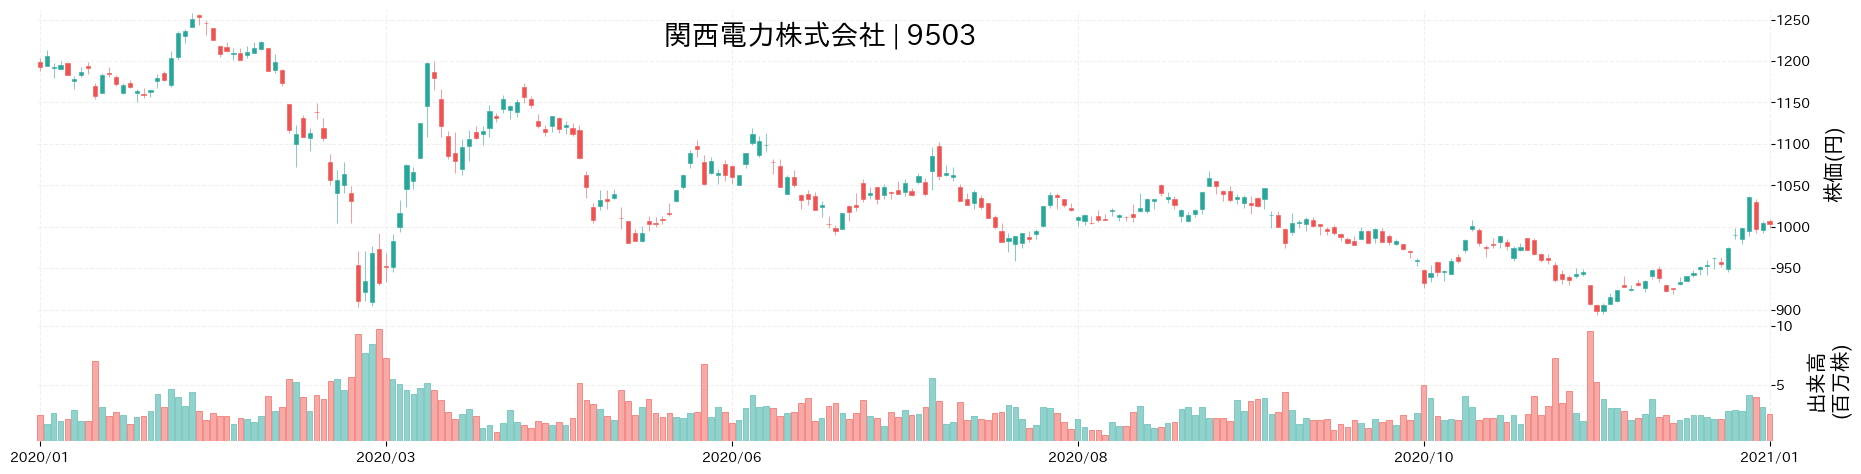 関西電力の株価推移(2020)